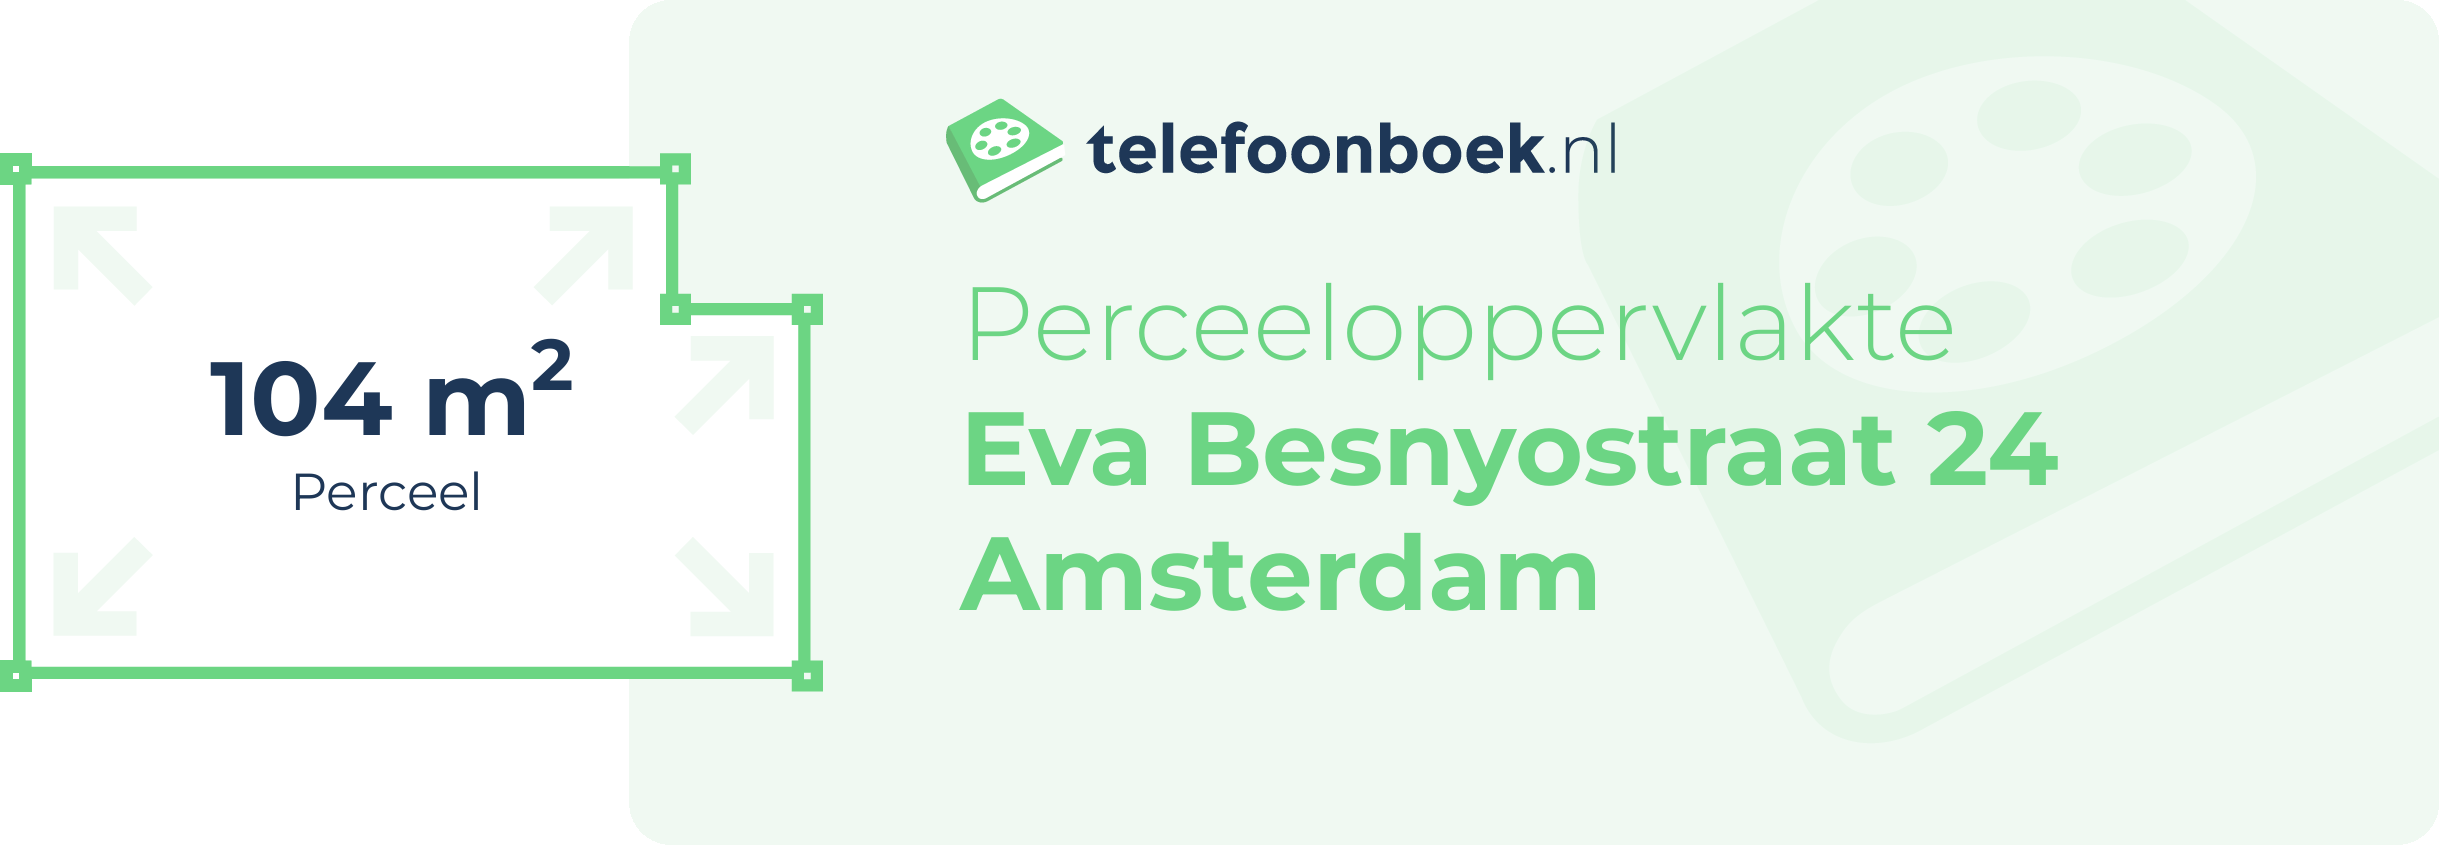 Perceeloppervlakte Eva Besnyostraat 24 Amsterdam